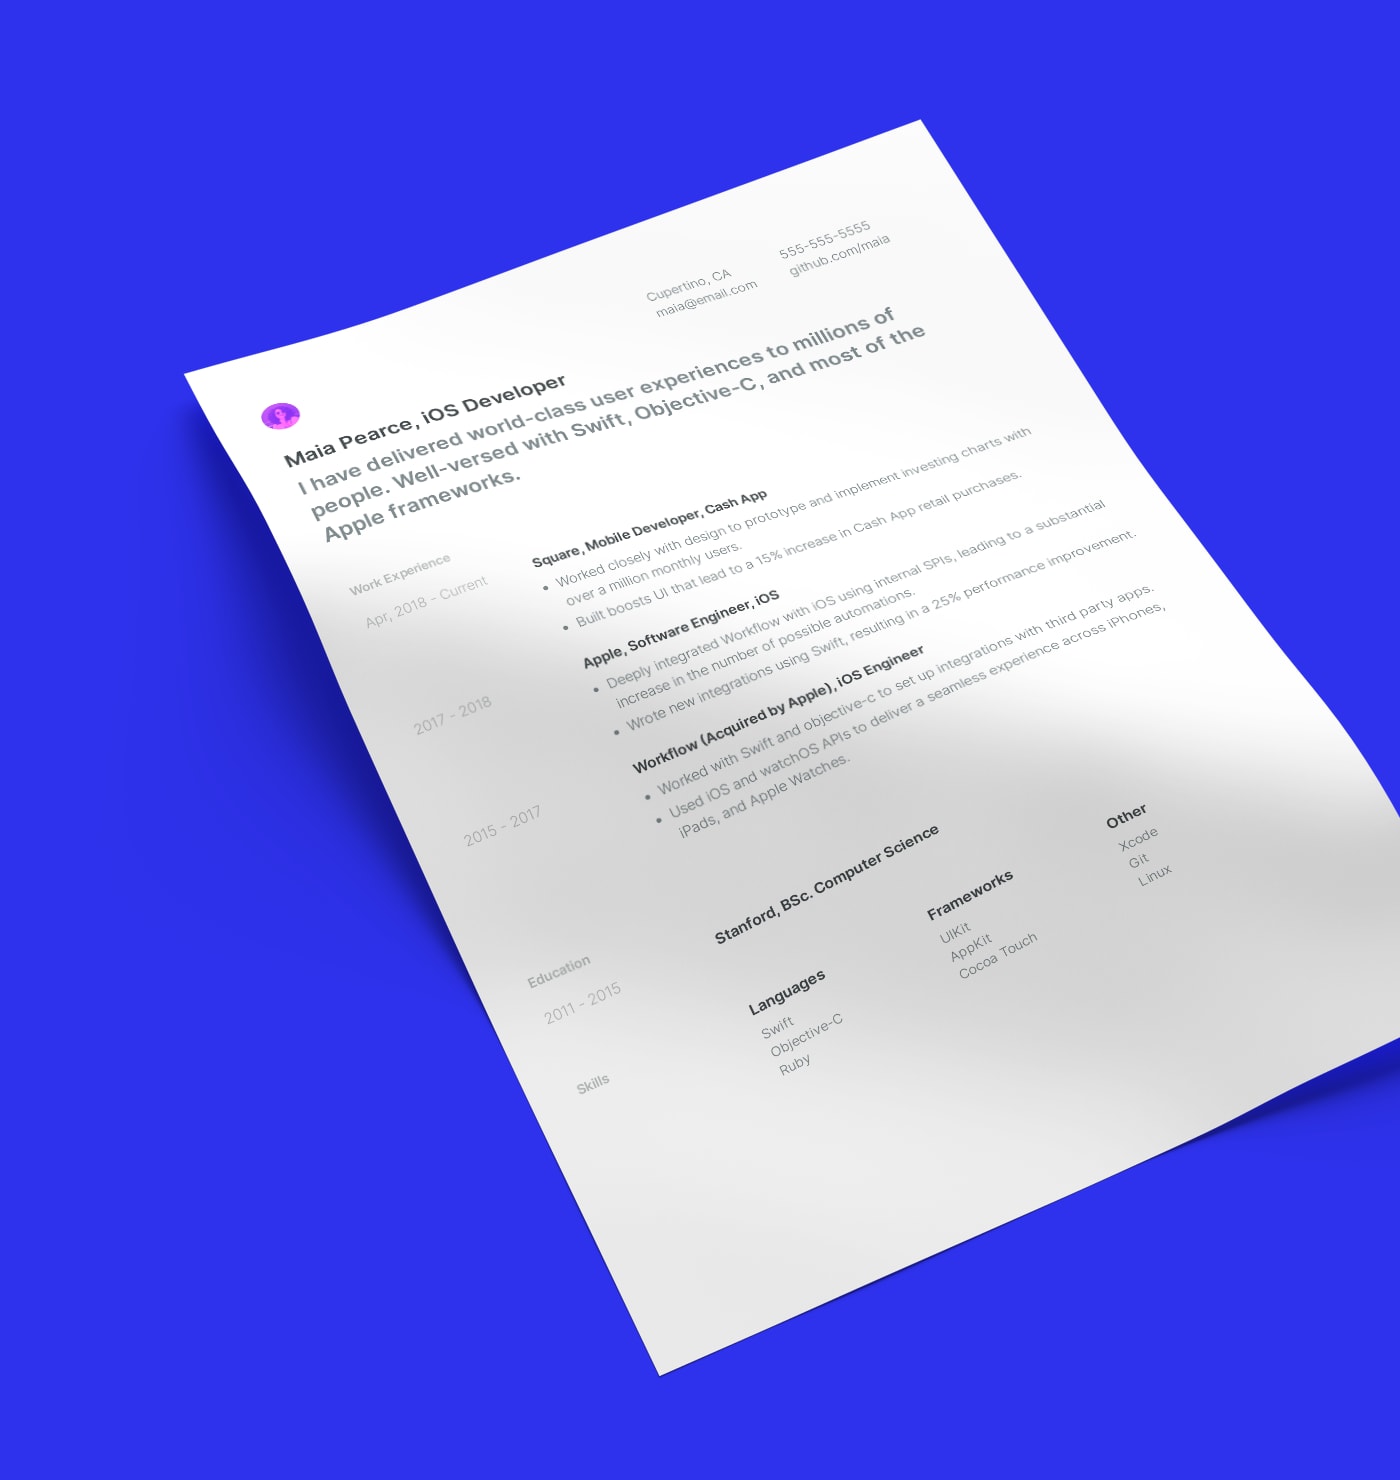 Pender modern resume template built with Standard Resume builder.